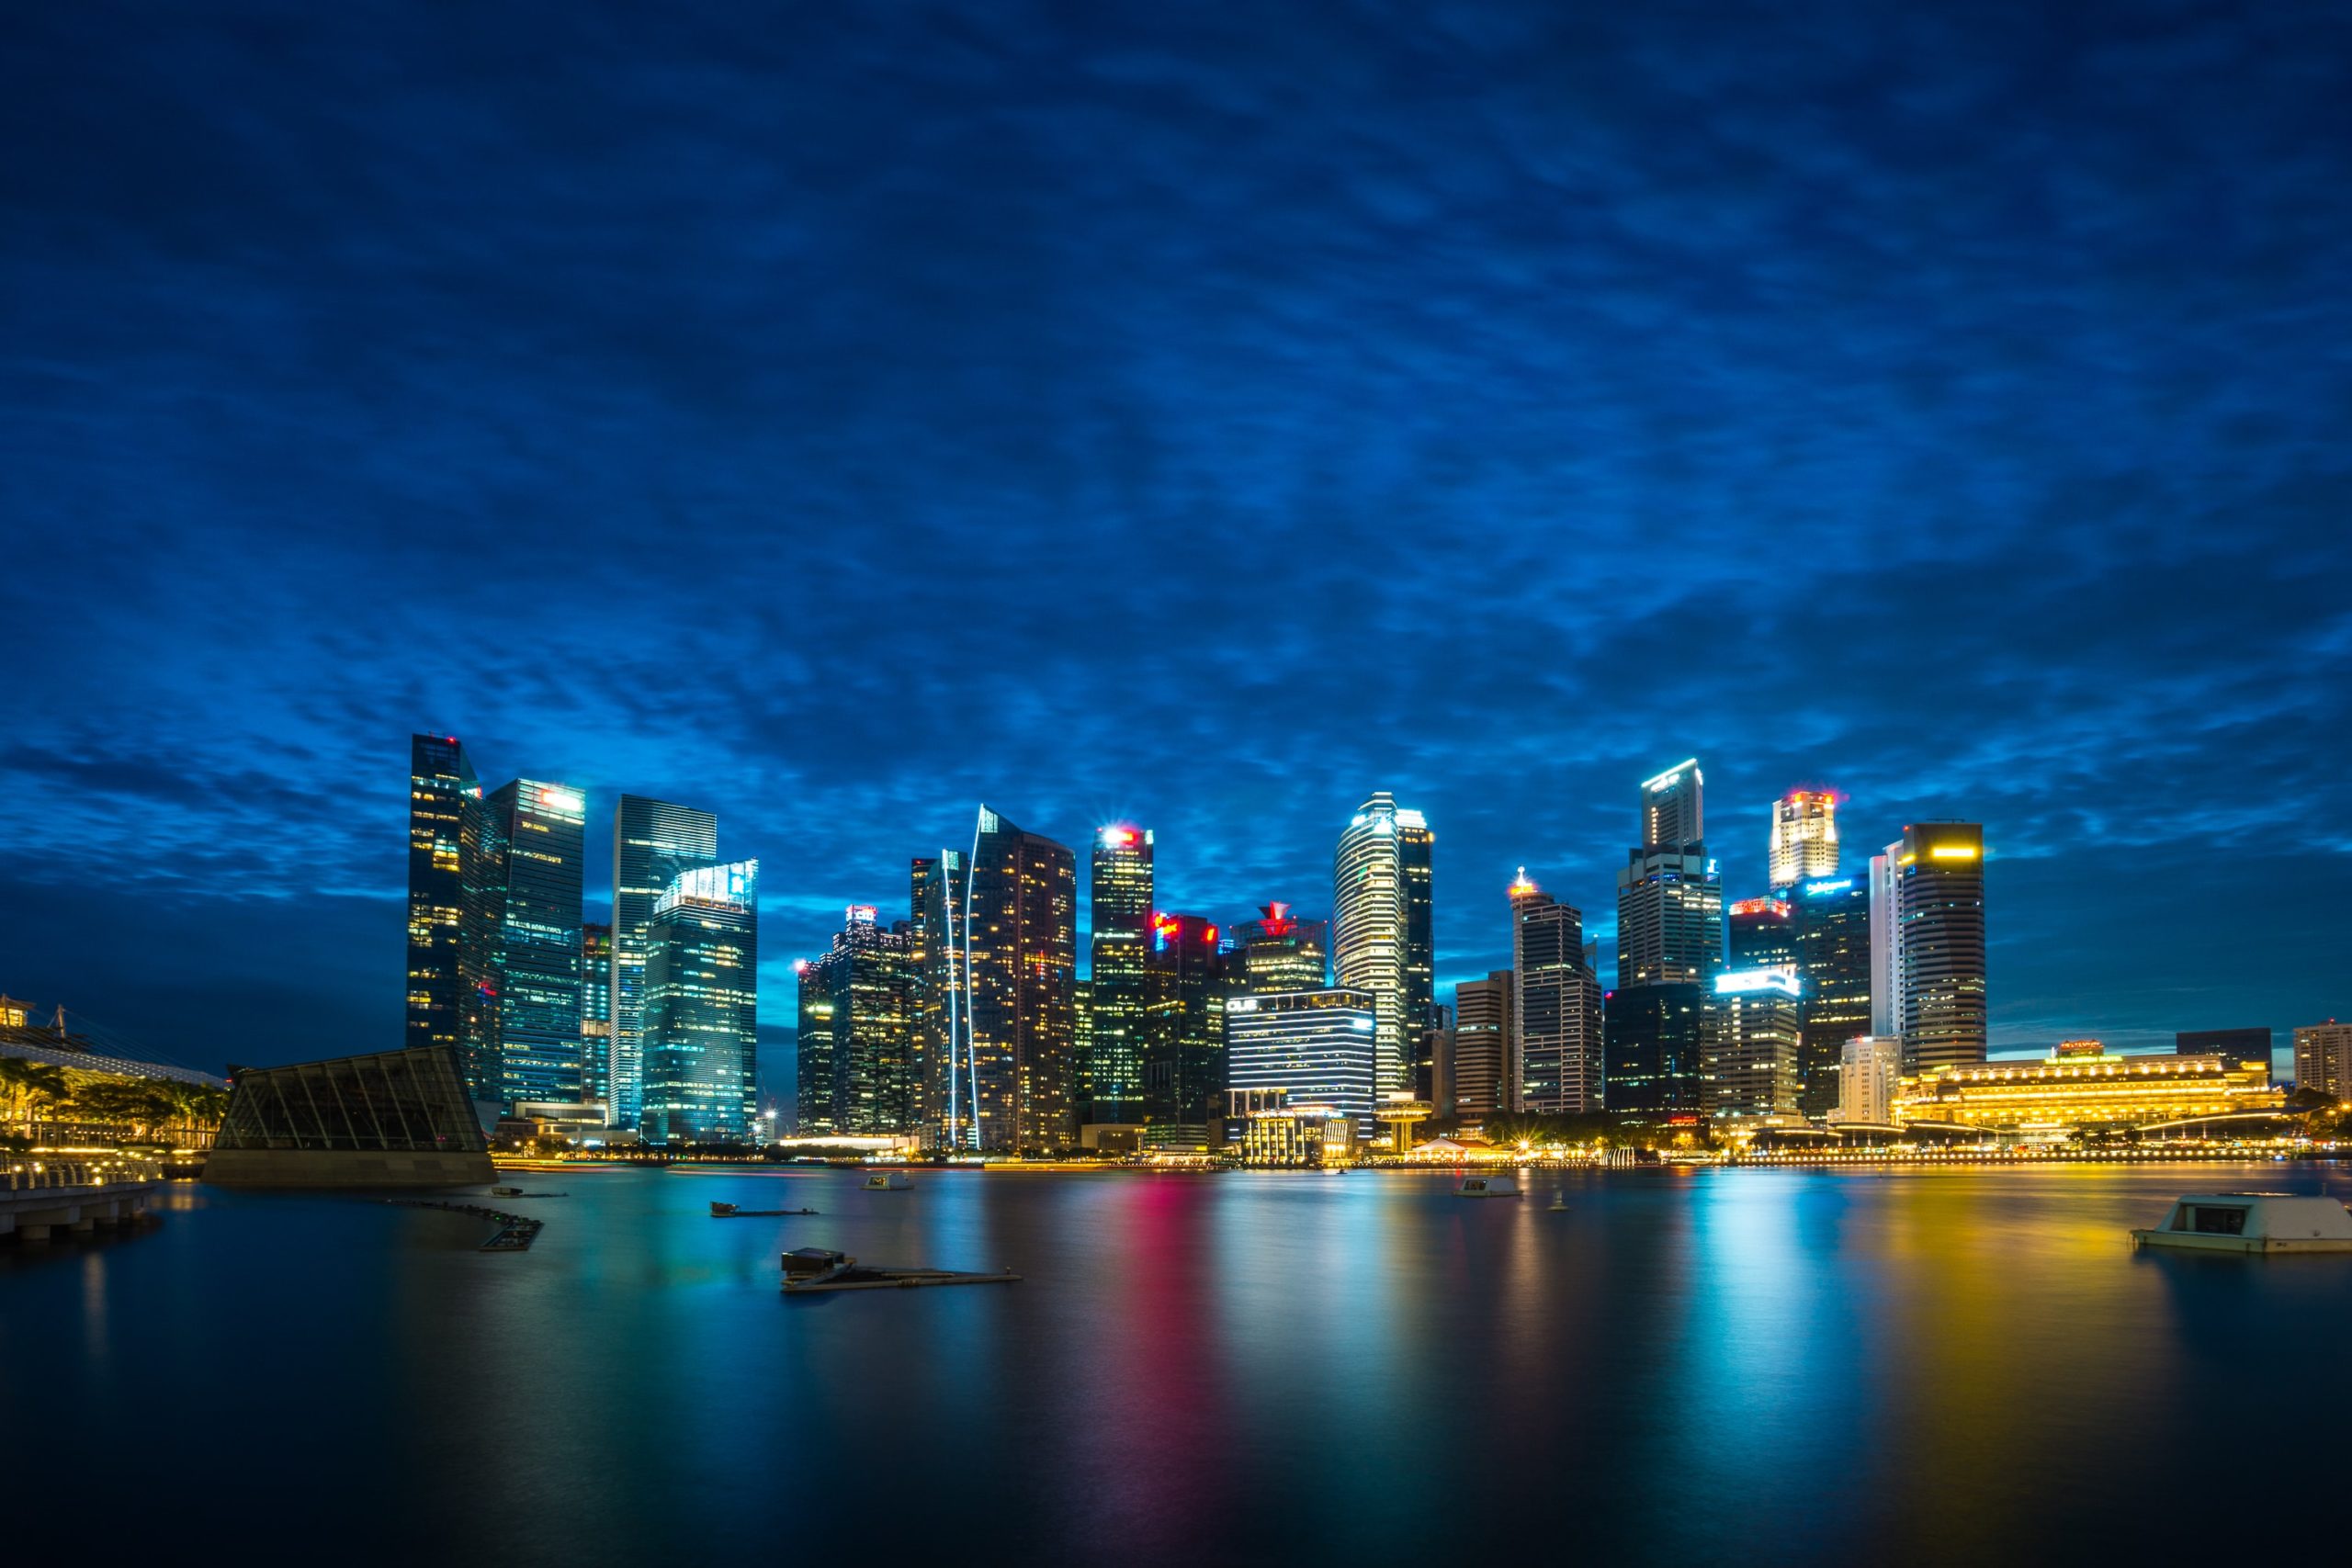 The skyline of Singapore’s financial hub. Image: Mike Enerio
